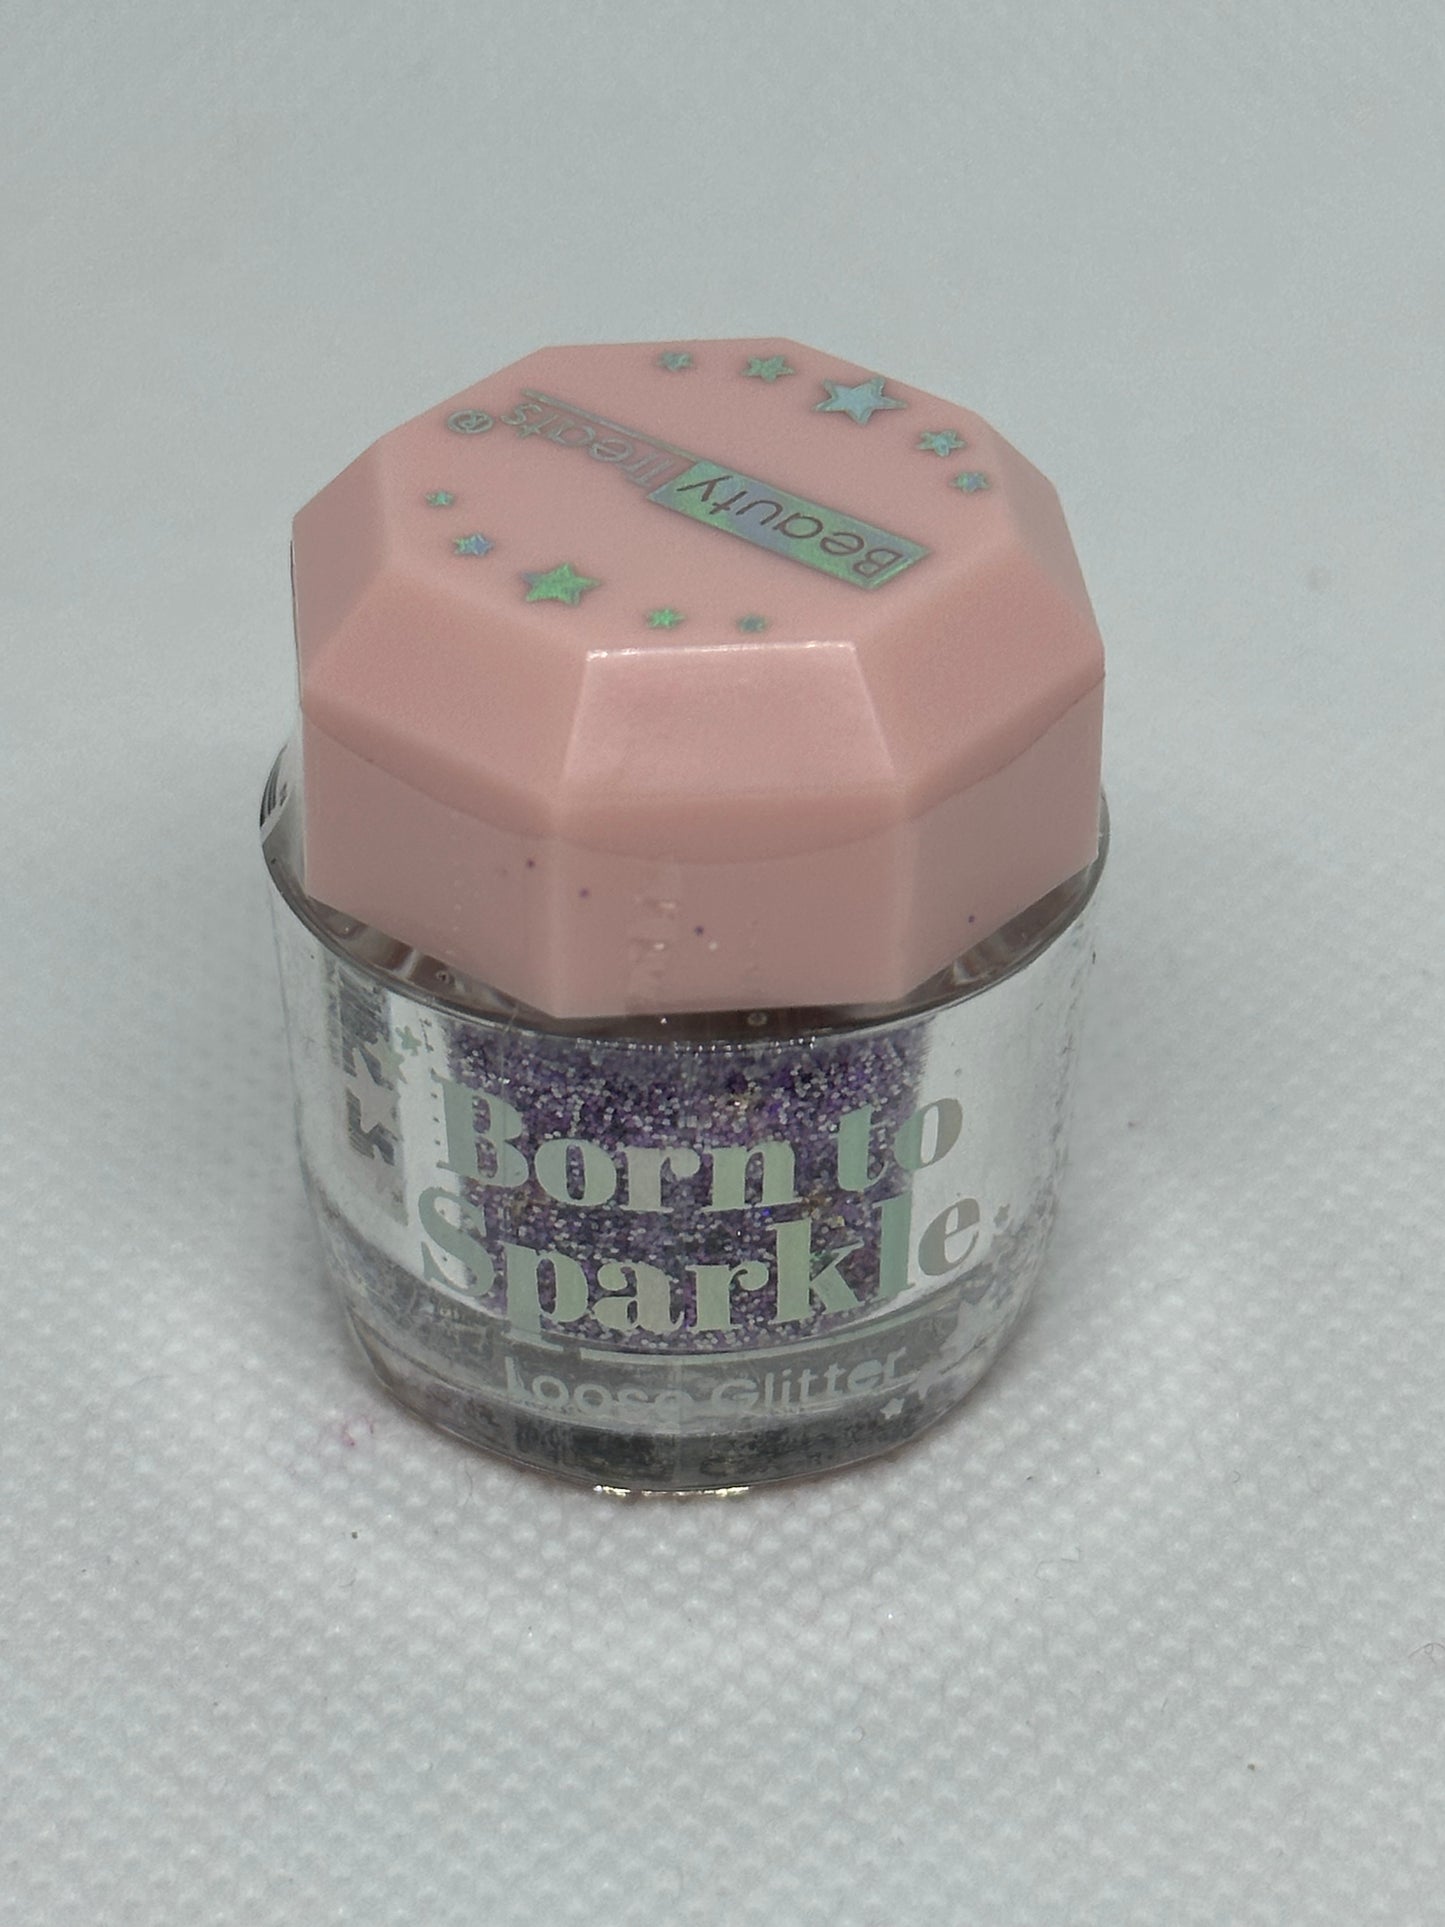 Born To Sparkle(Loose Glitter Powder)